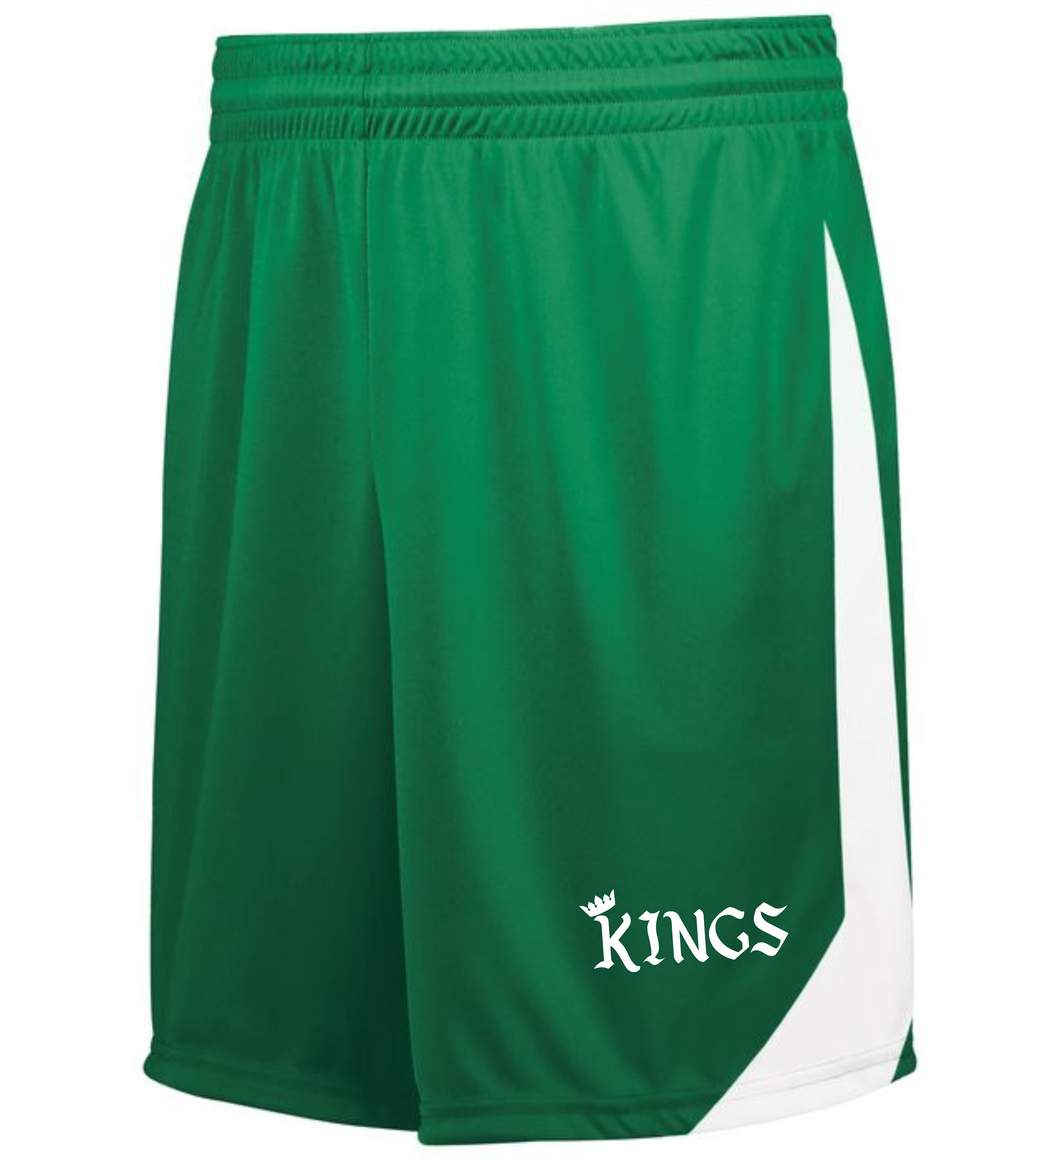 ATL-KINGS-730-2 - High Five Athletico Shorts (6 1/2 Inch Inseam) - Kings Logo